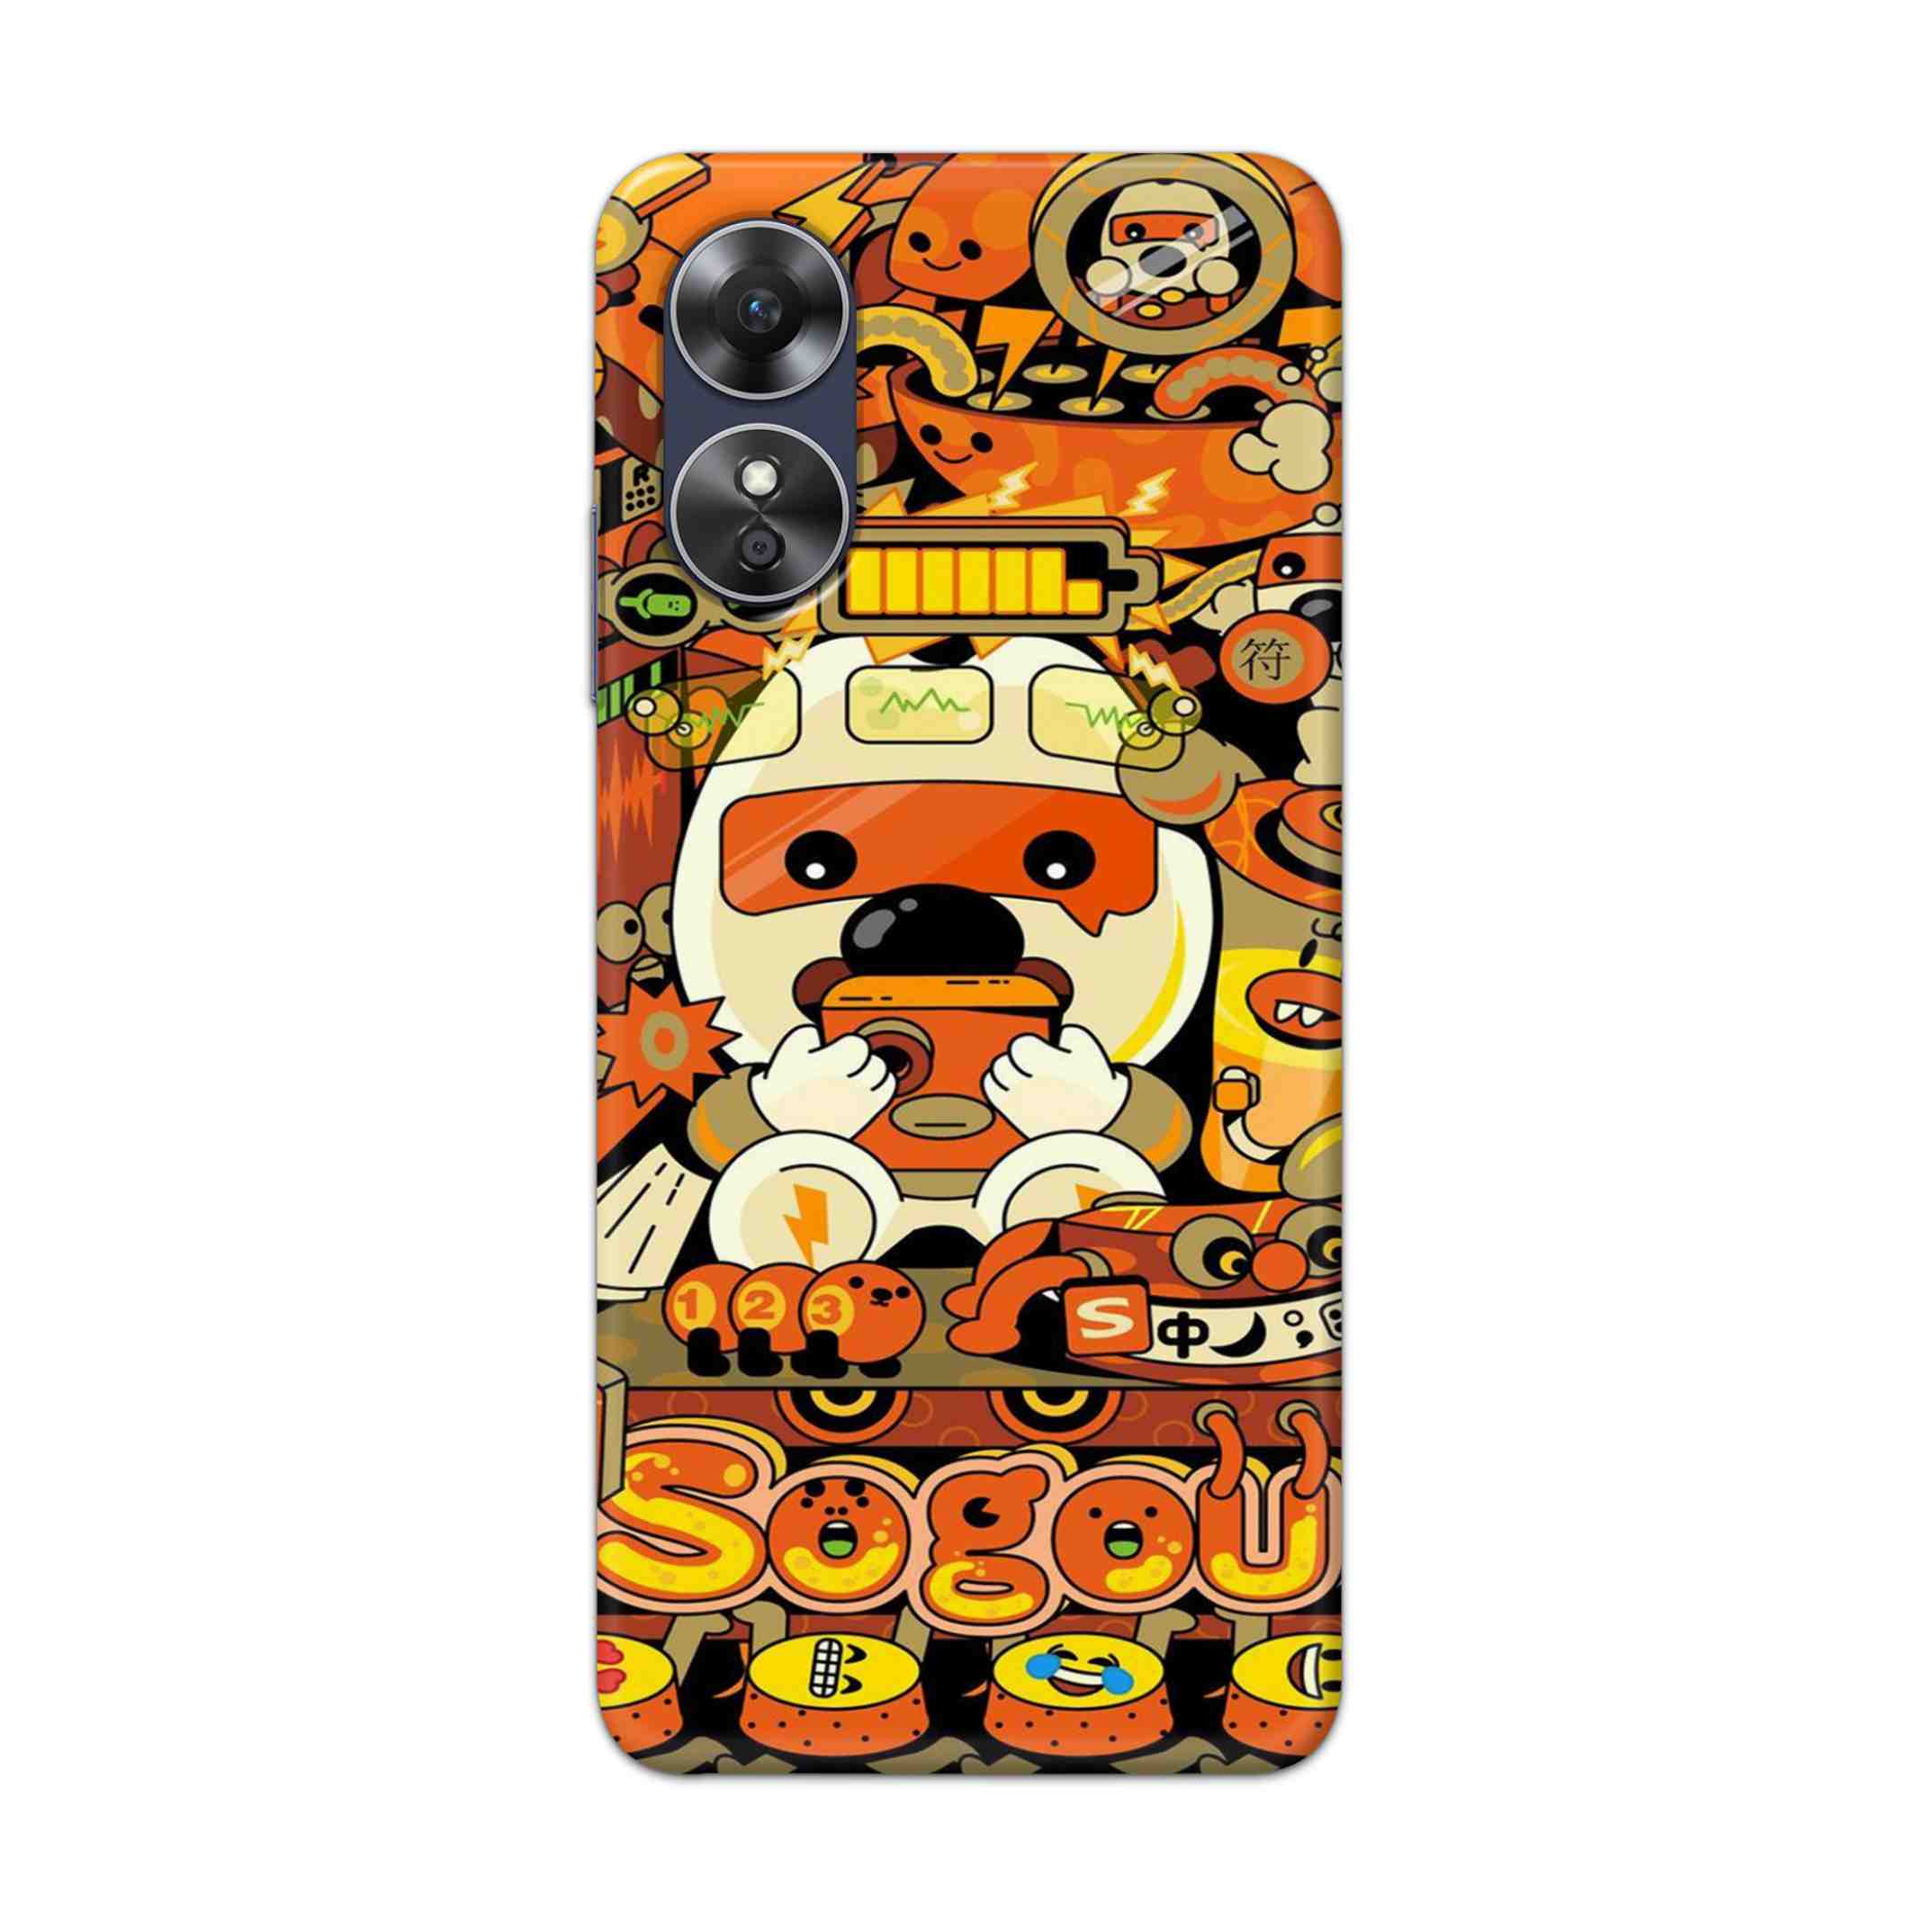 Buy Sogou Hard Back Mobile Phone Case Cover For Oppo A17 Online